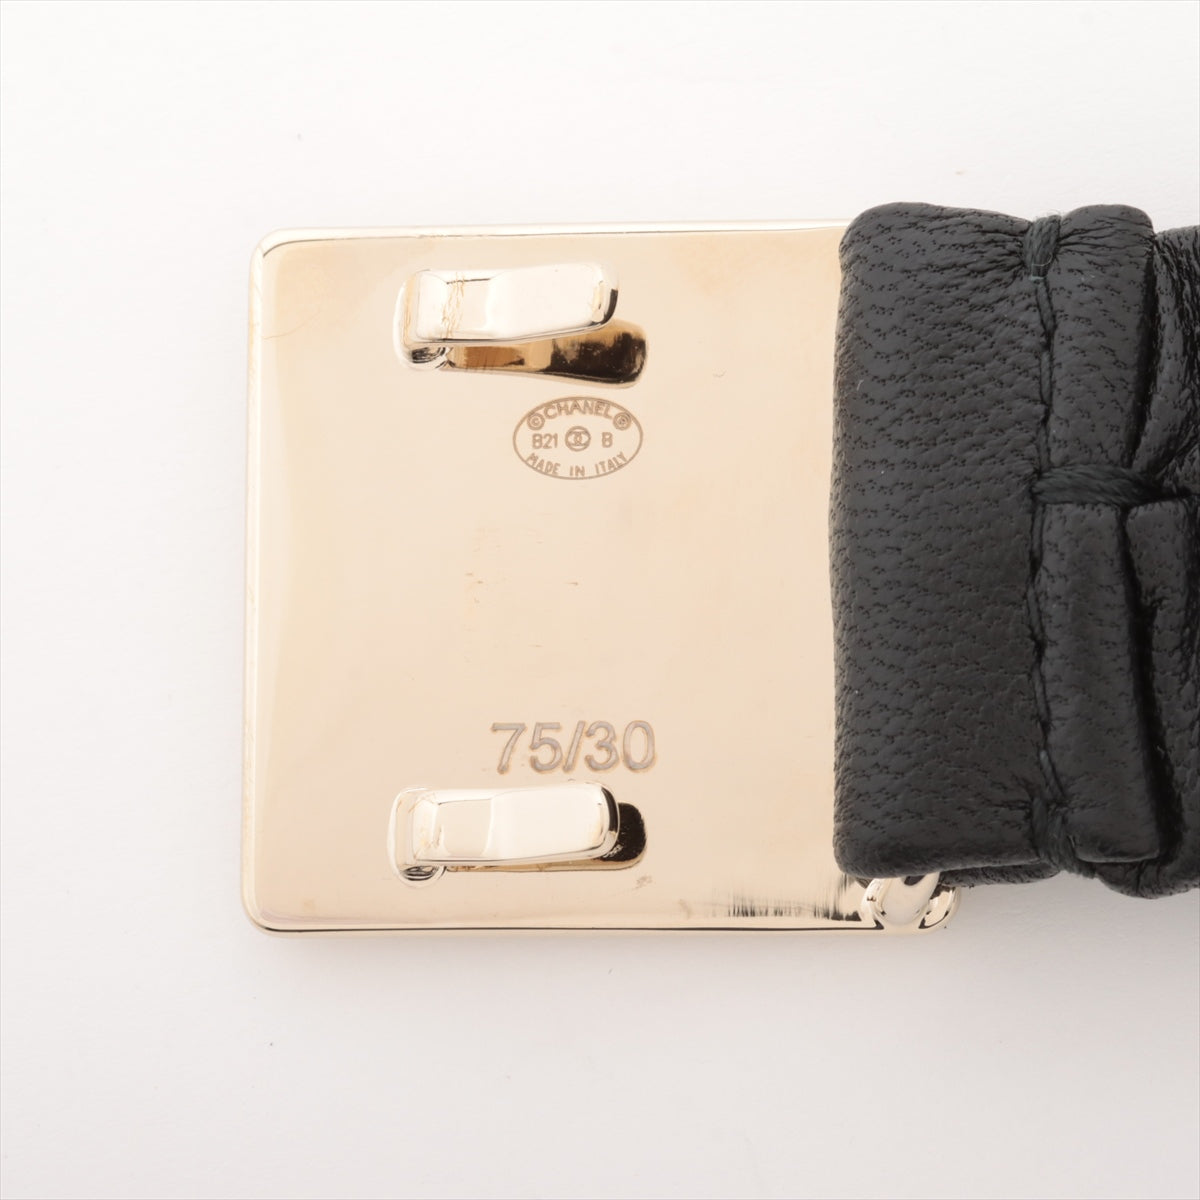 Chanel Coco Mark B21B Belt 75 Leather Black